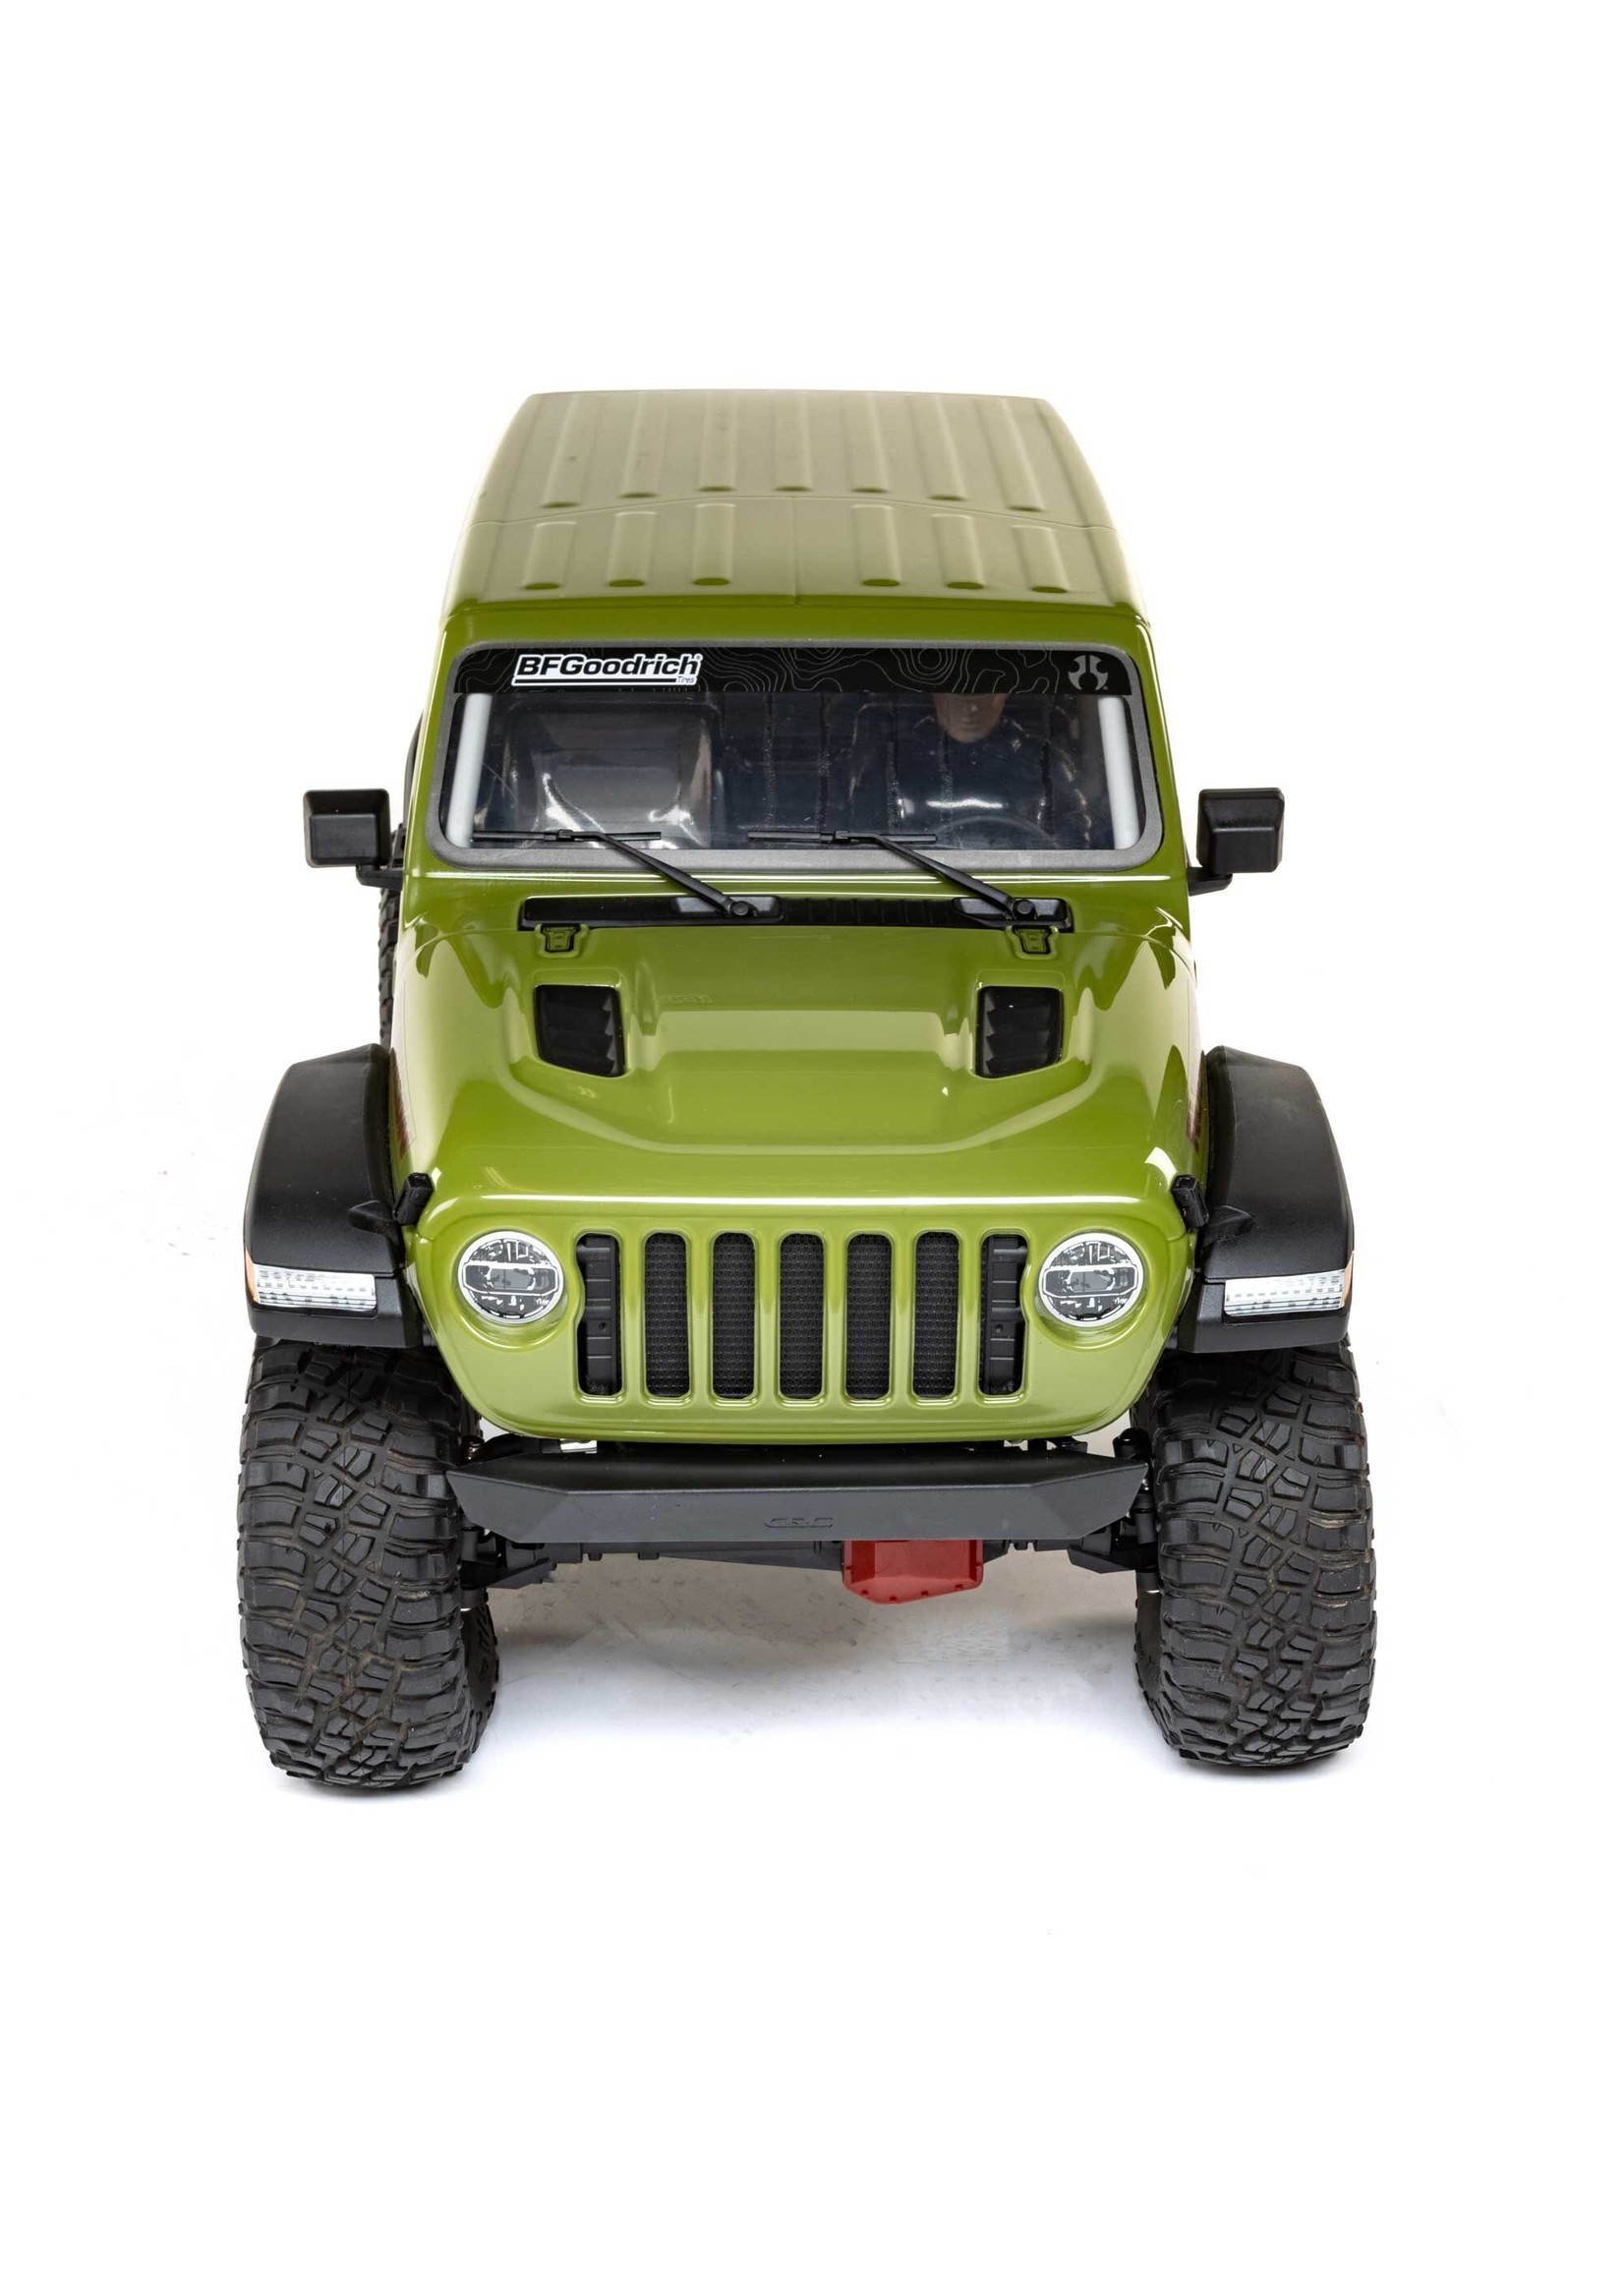 Axial 1/6 SCX6 Jeep JLU Wrangler 4WD Rock Crawler RTR: Green